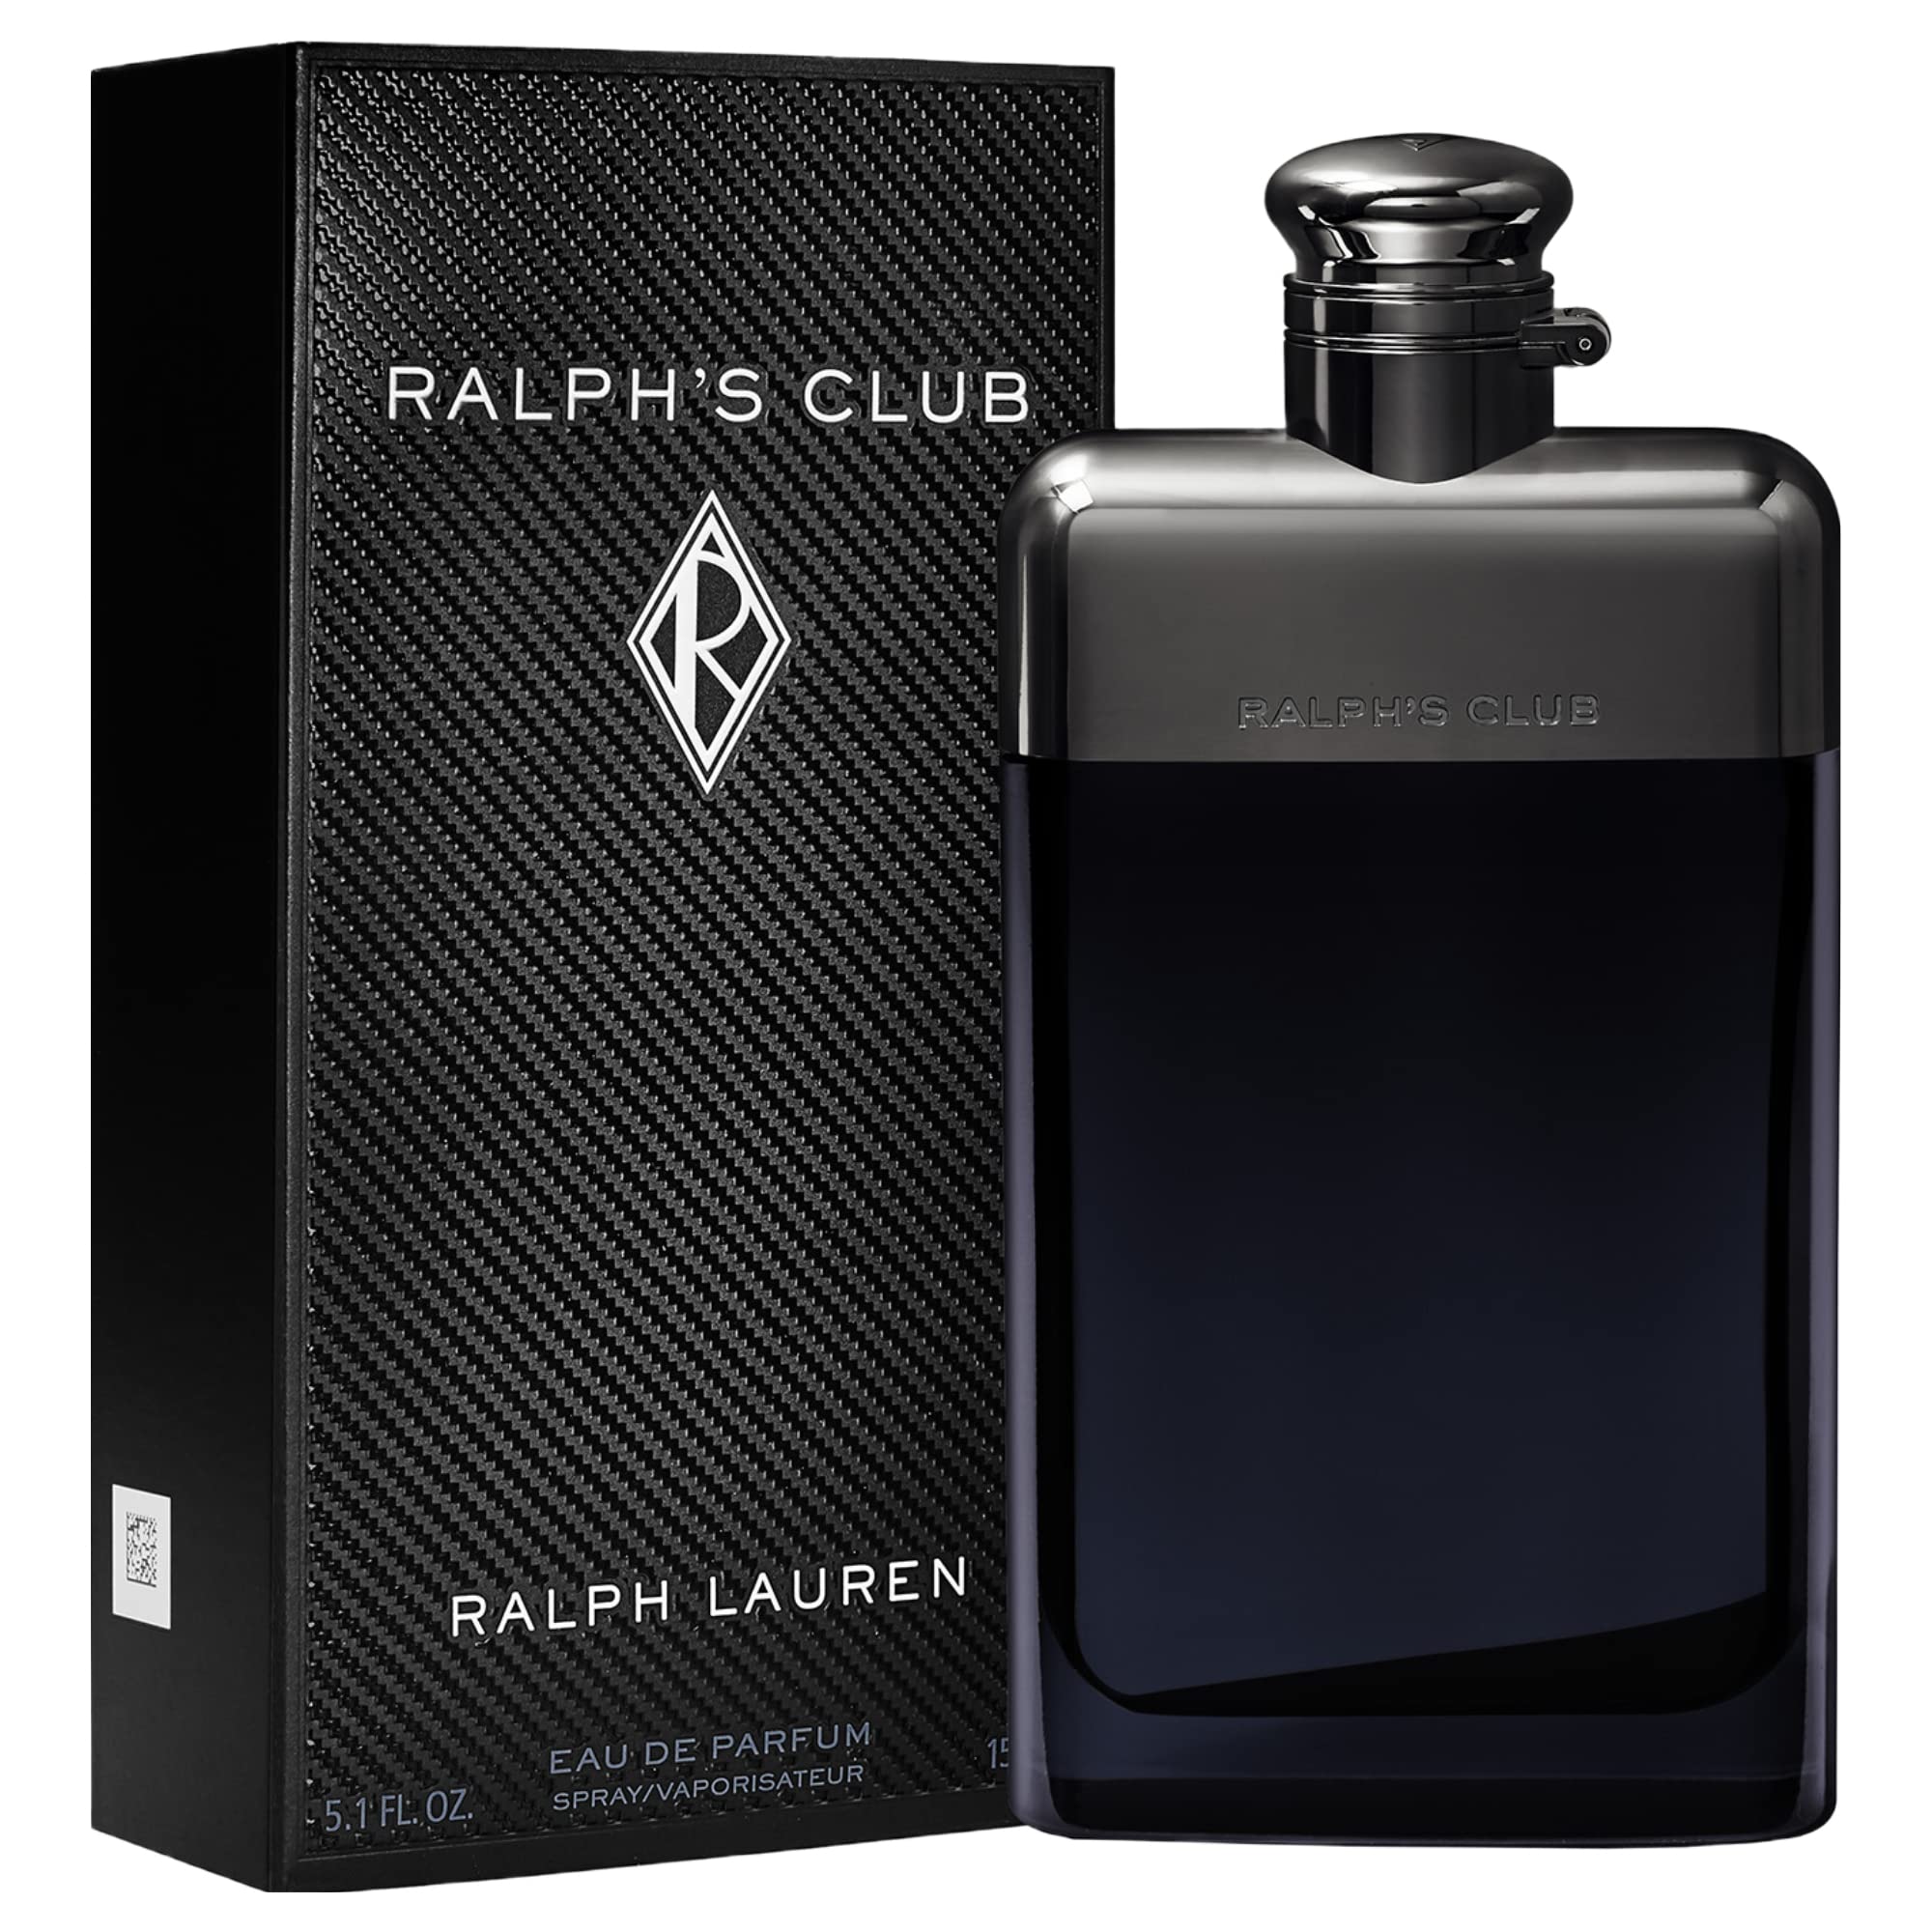 Ralph Lauren - Ralph's Club - Eau de Parfum - Men's Cologne - Woody & Fresh - With Lavandin, Sage, Vetiver, and Cedarwood - Medium Intensity